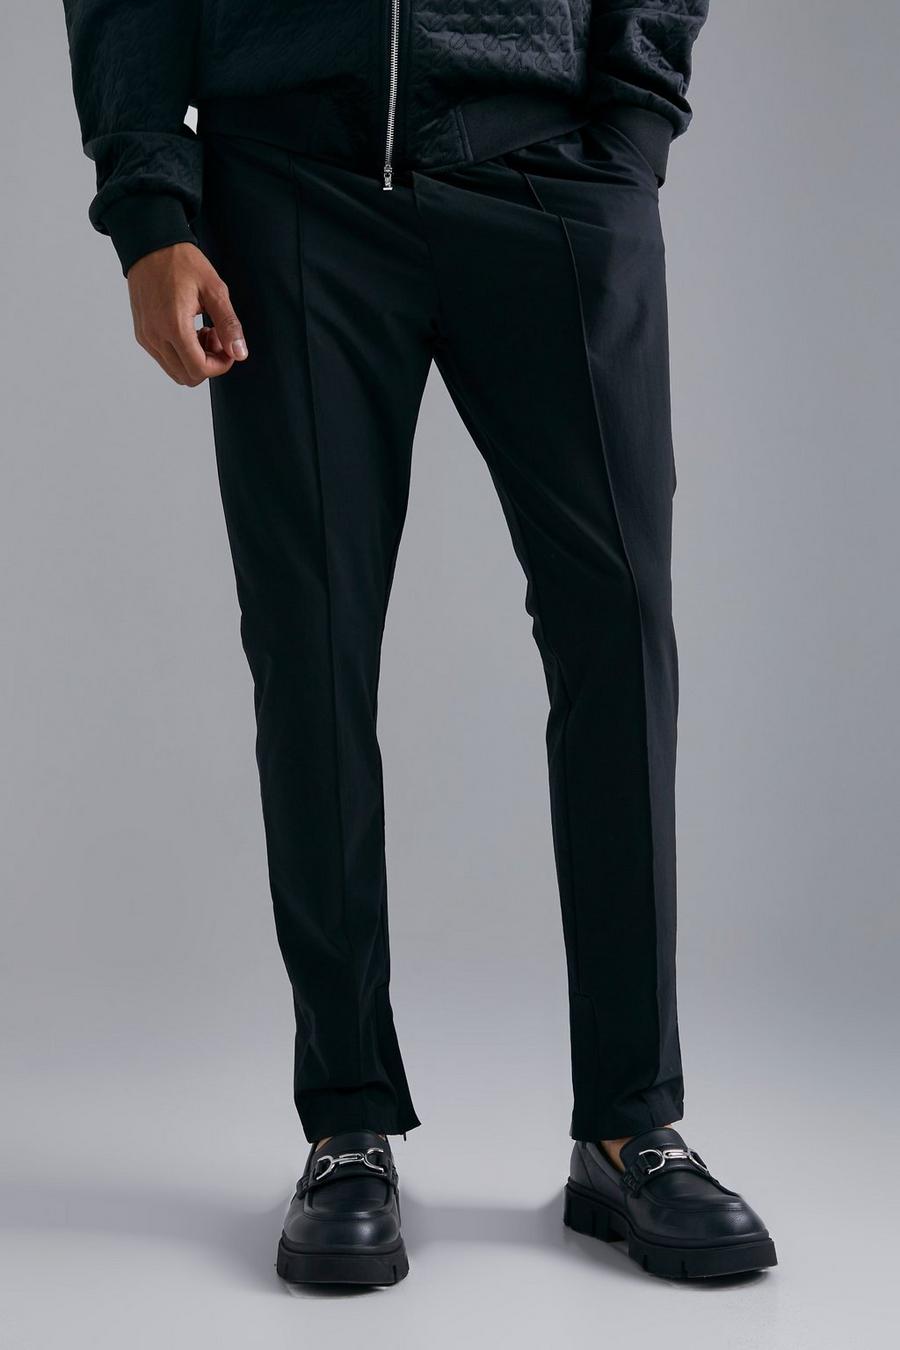 Tall Slim-Fit Hose mit 4-Way Stretch, Black schwarz